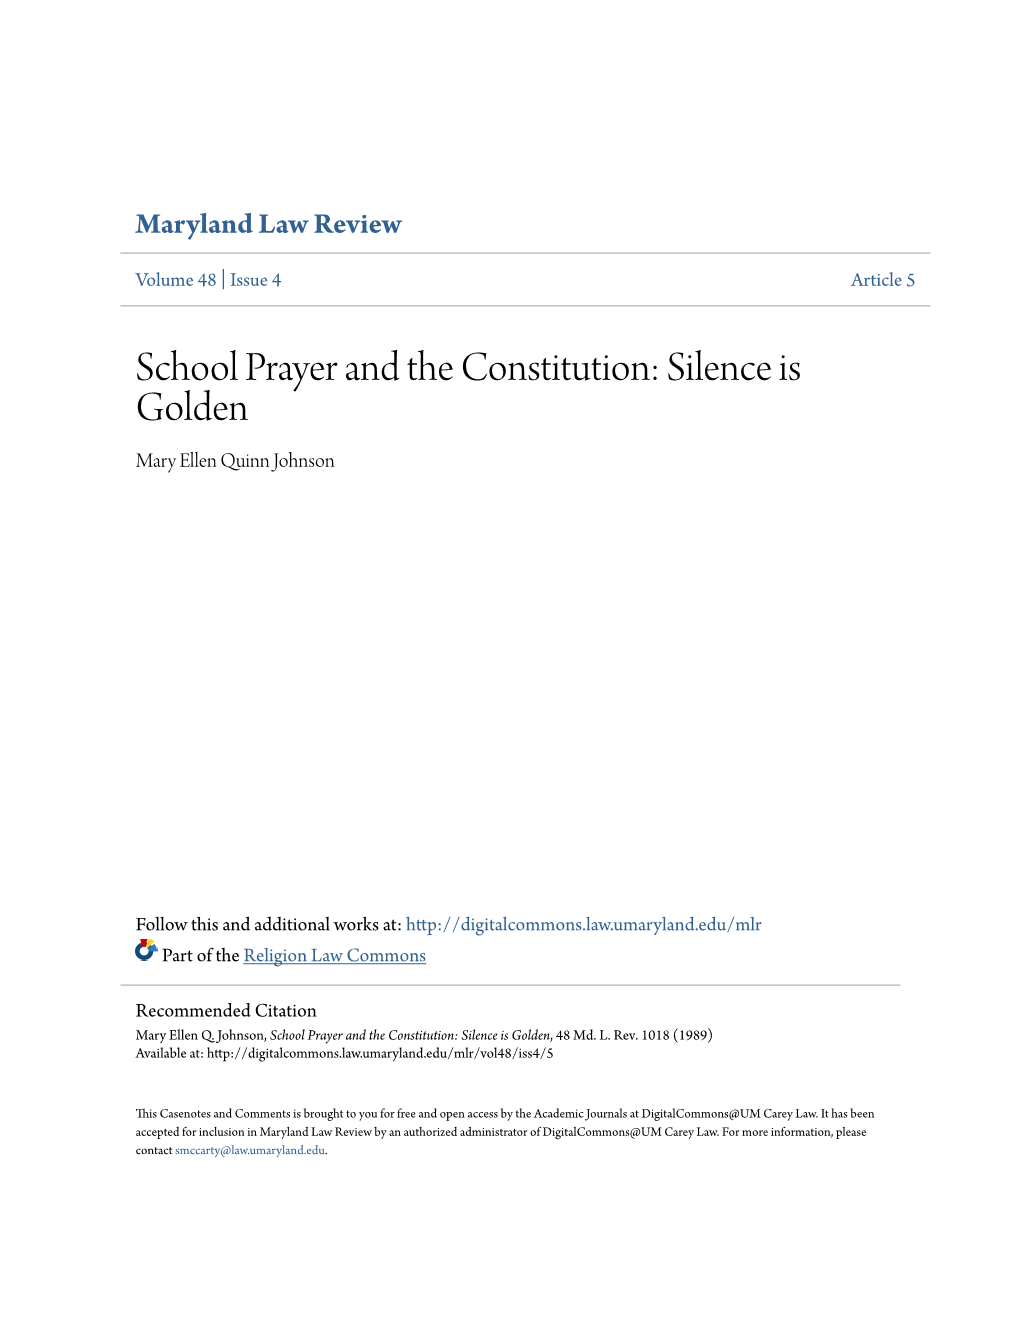 School Prayer and the Constitution: Silence Is Golden Mary Ellen Quinn Johnson